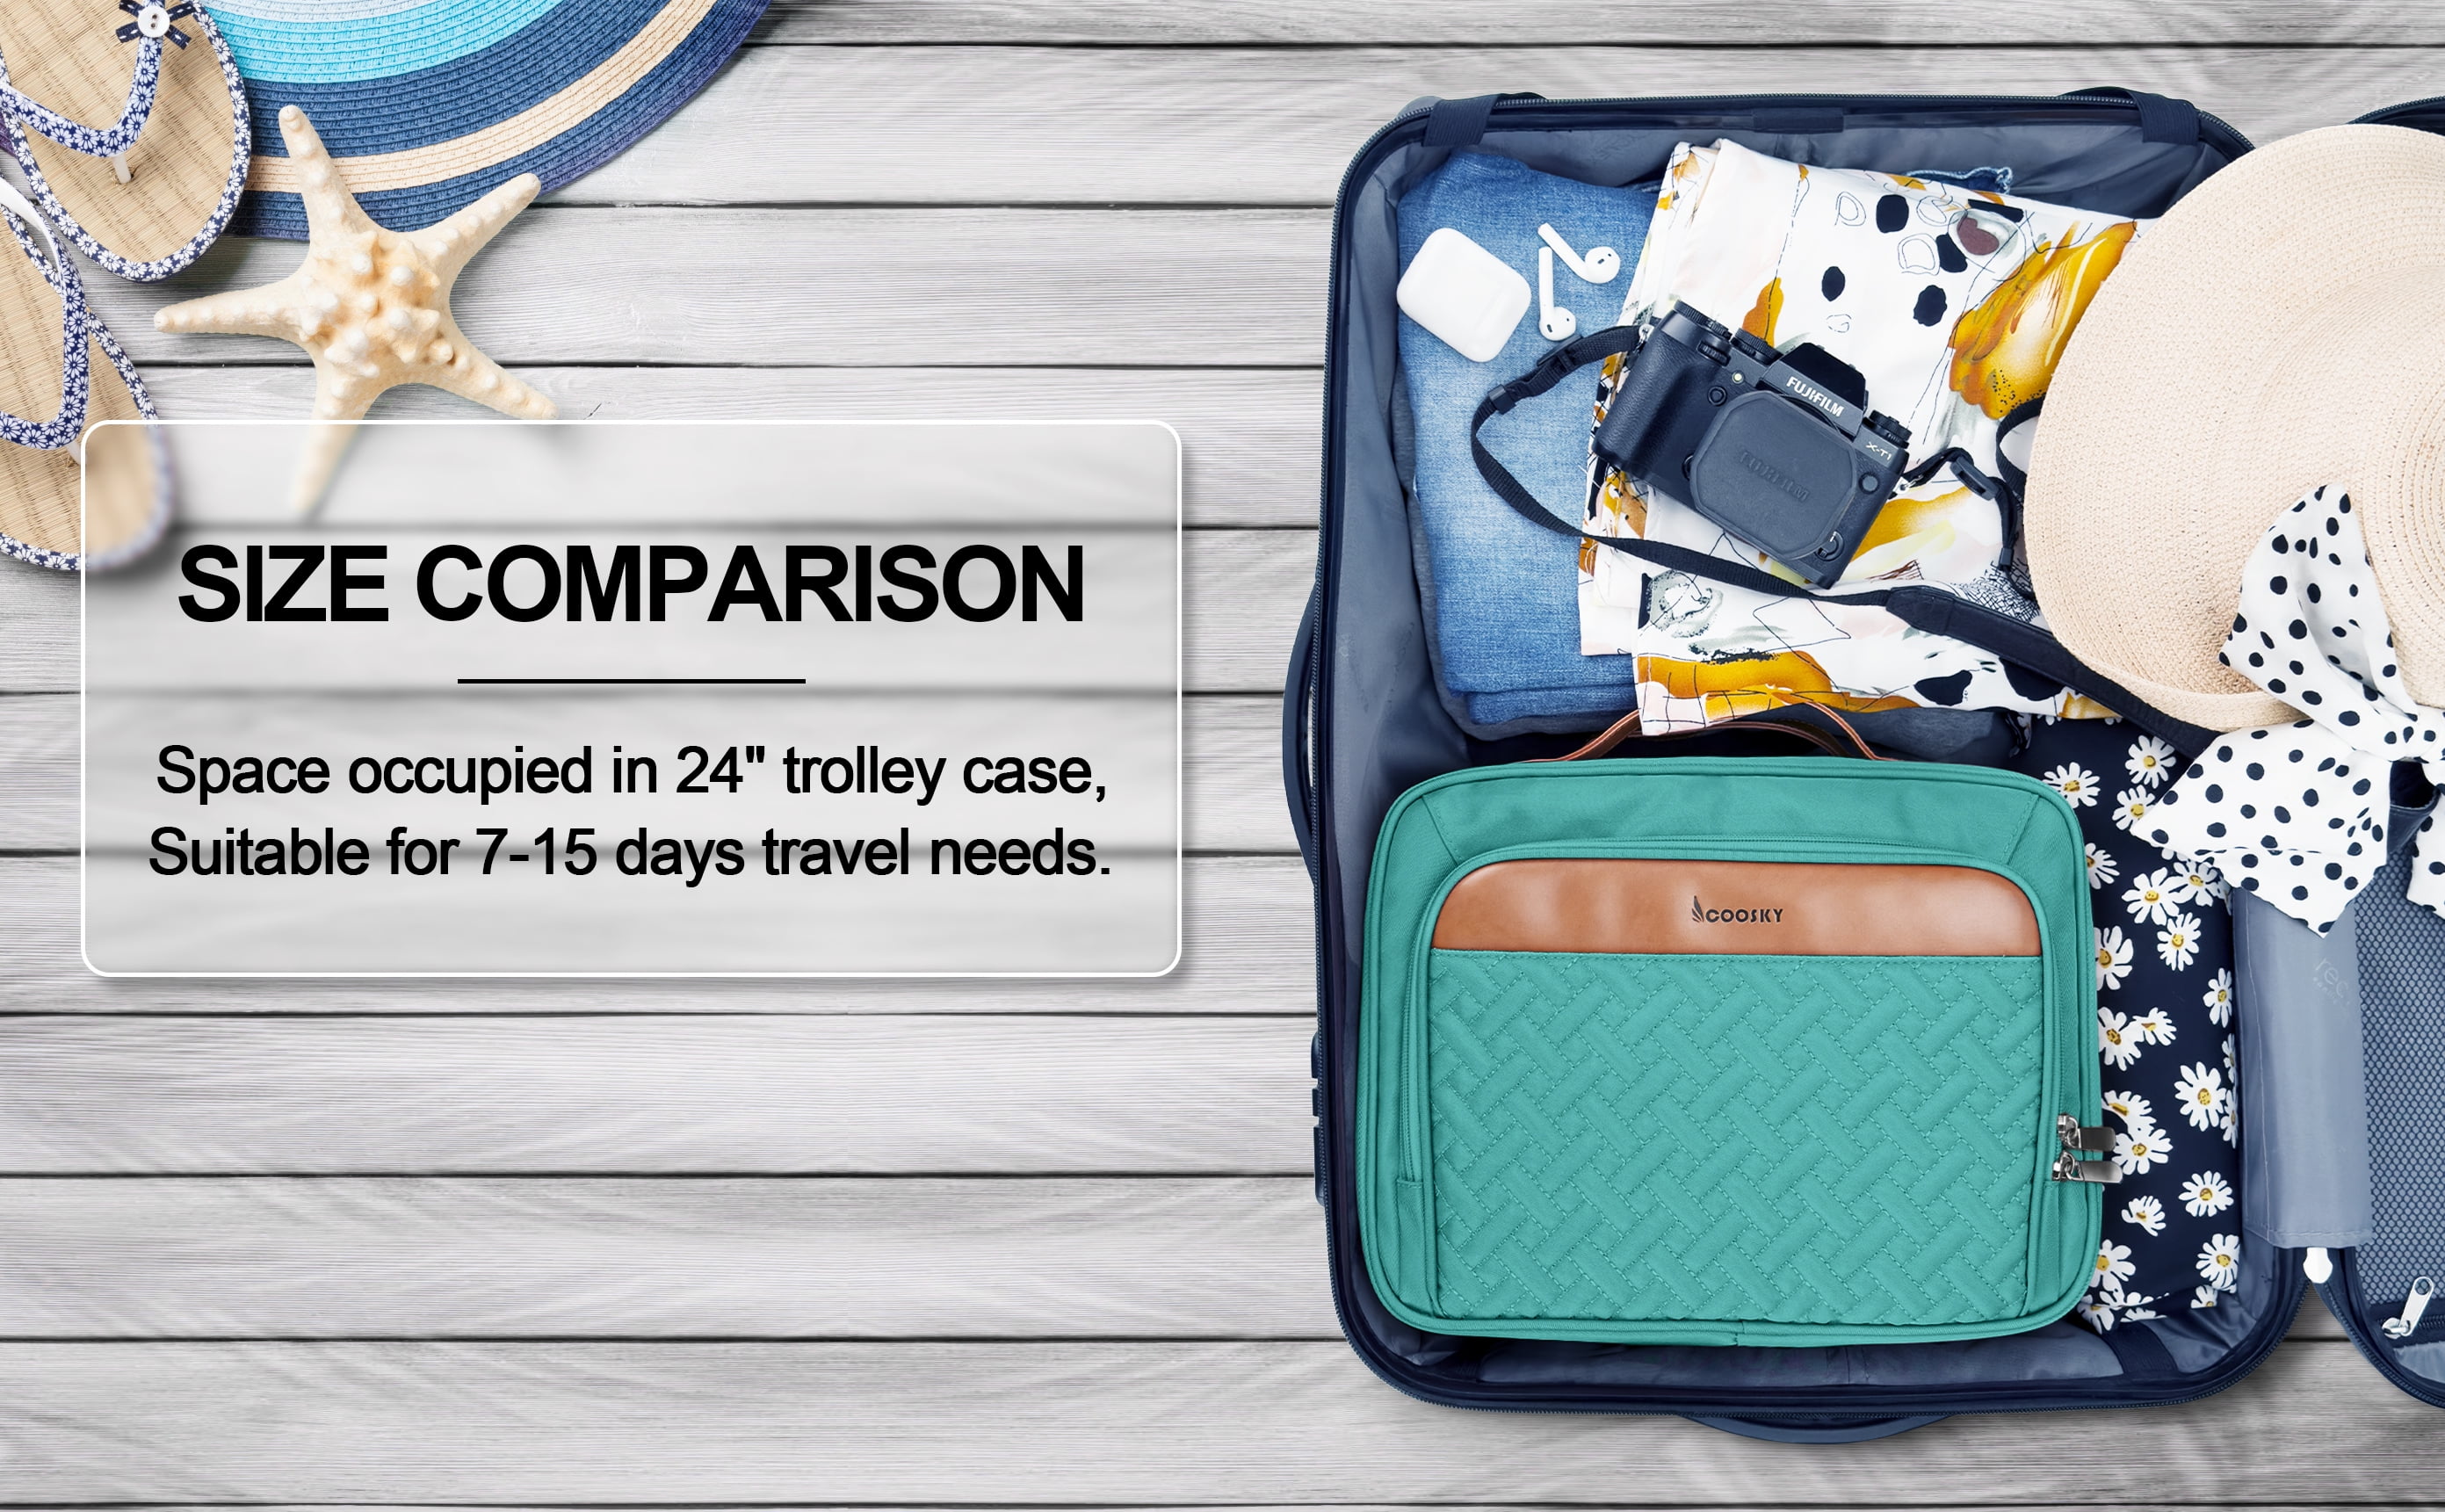 Travel luggage bag – Take OFF Luggage – TAKE OFF Luggage